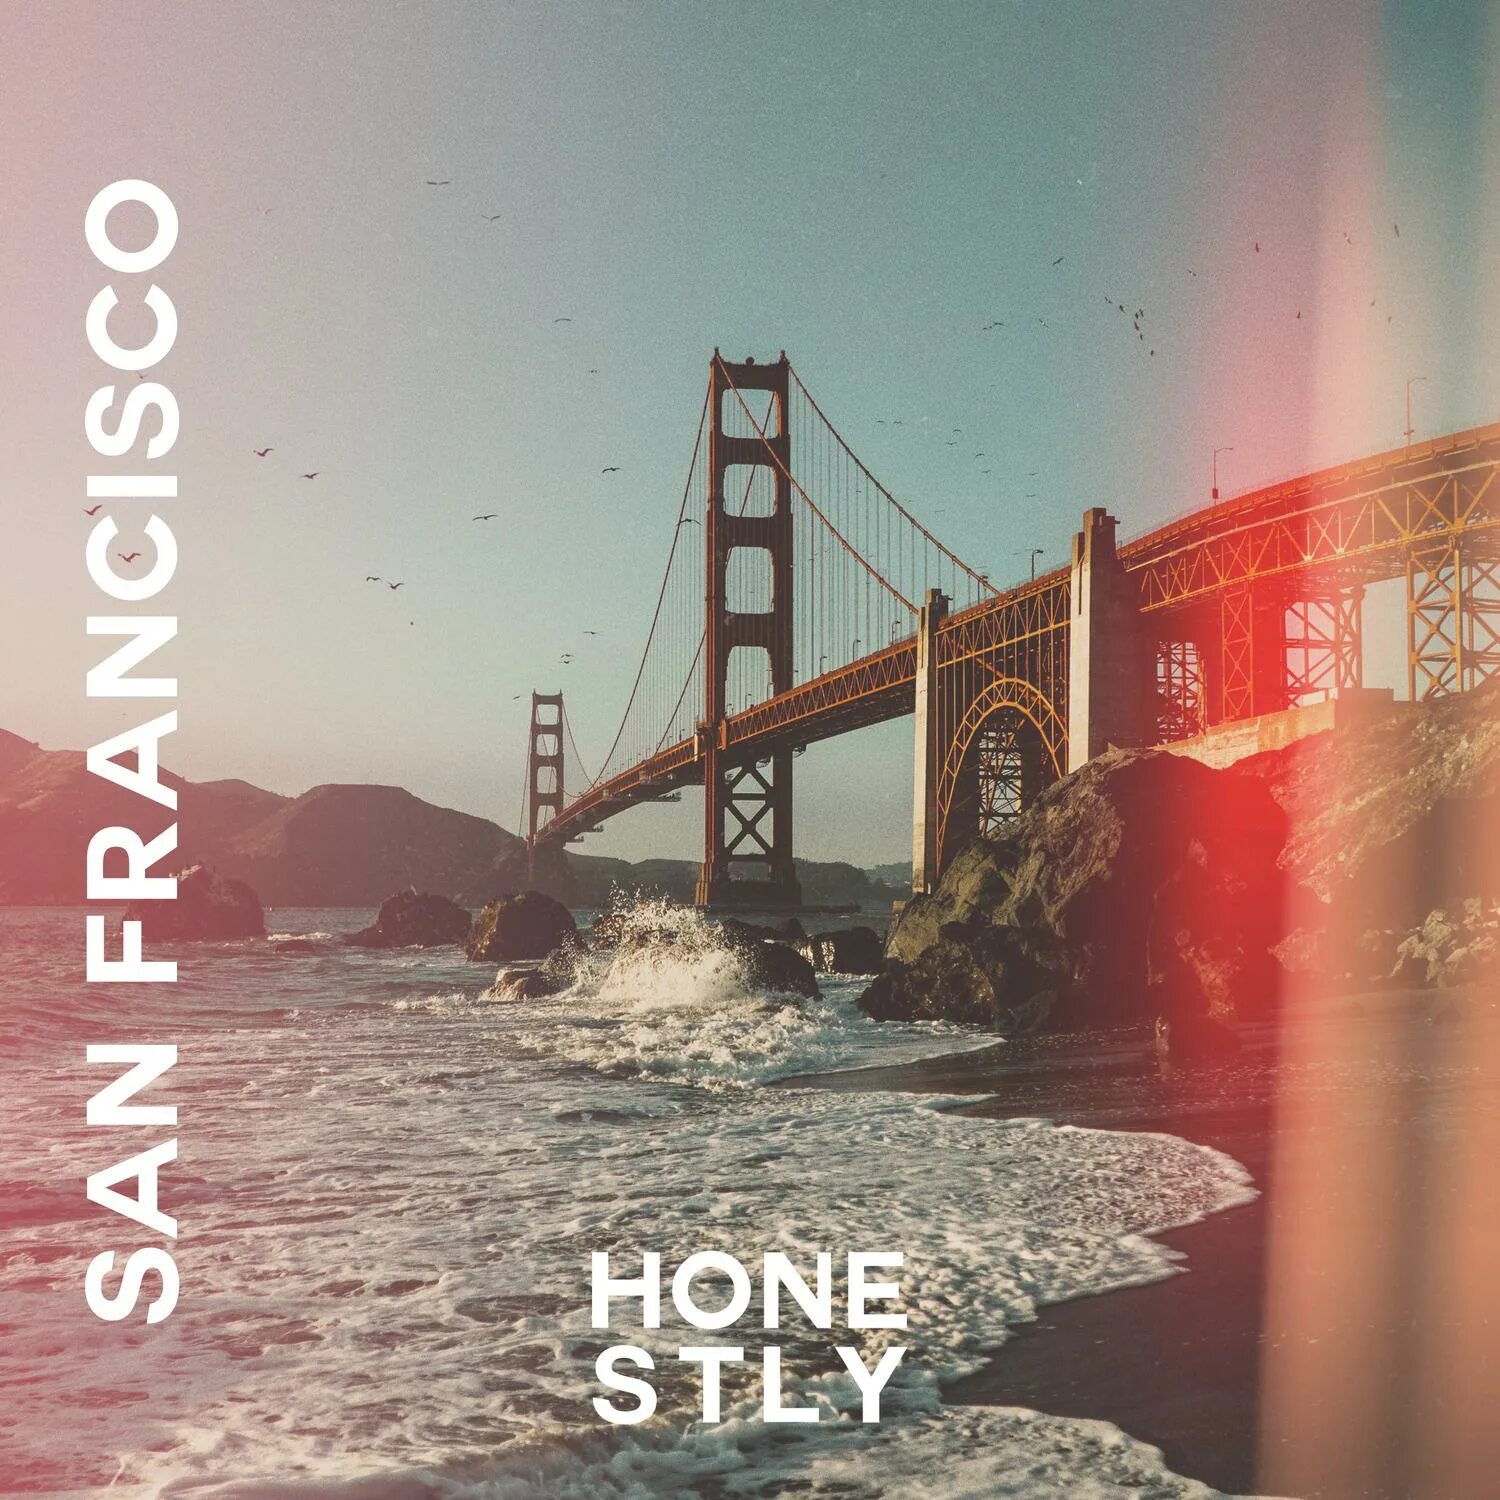 Сан франциско песня. Обложка альбома Сан-Франциско. Обложка альбома Сан-Франциско каскада. Сан-Франциско песня ремикс.